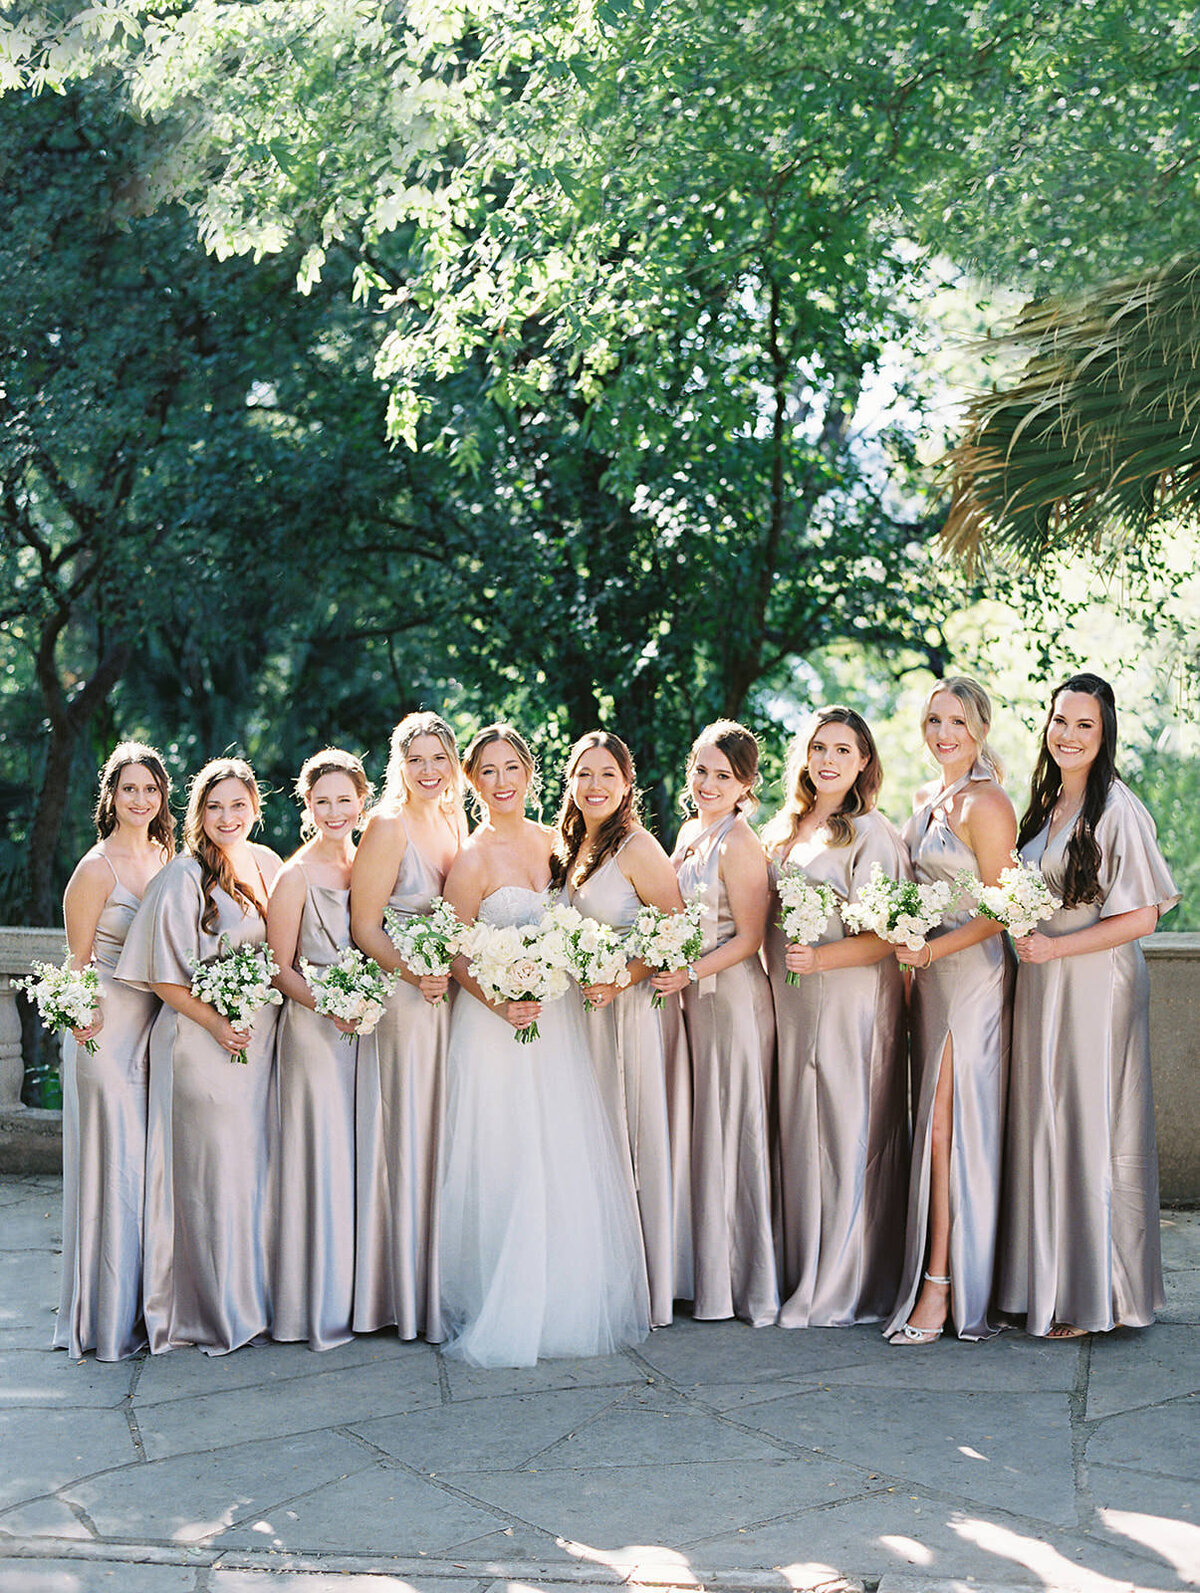 The bride poses with her bridesmaids at Laguna Gloria